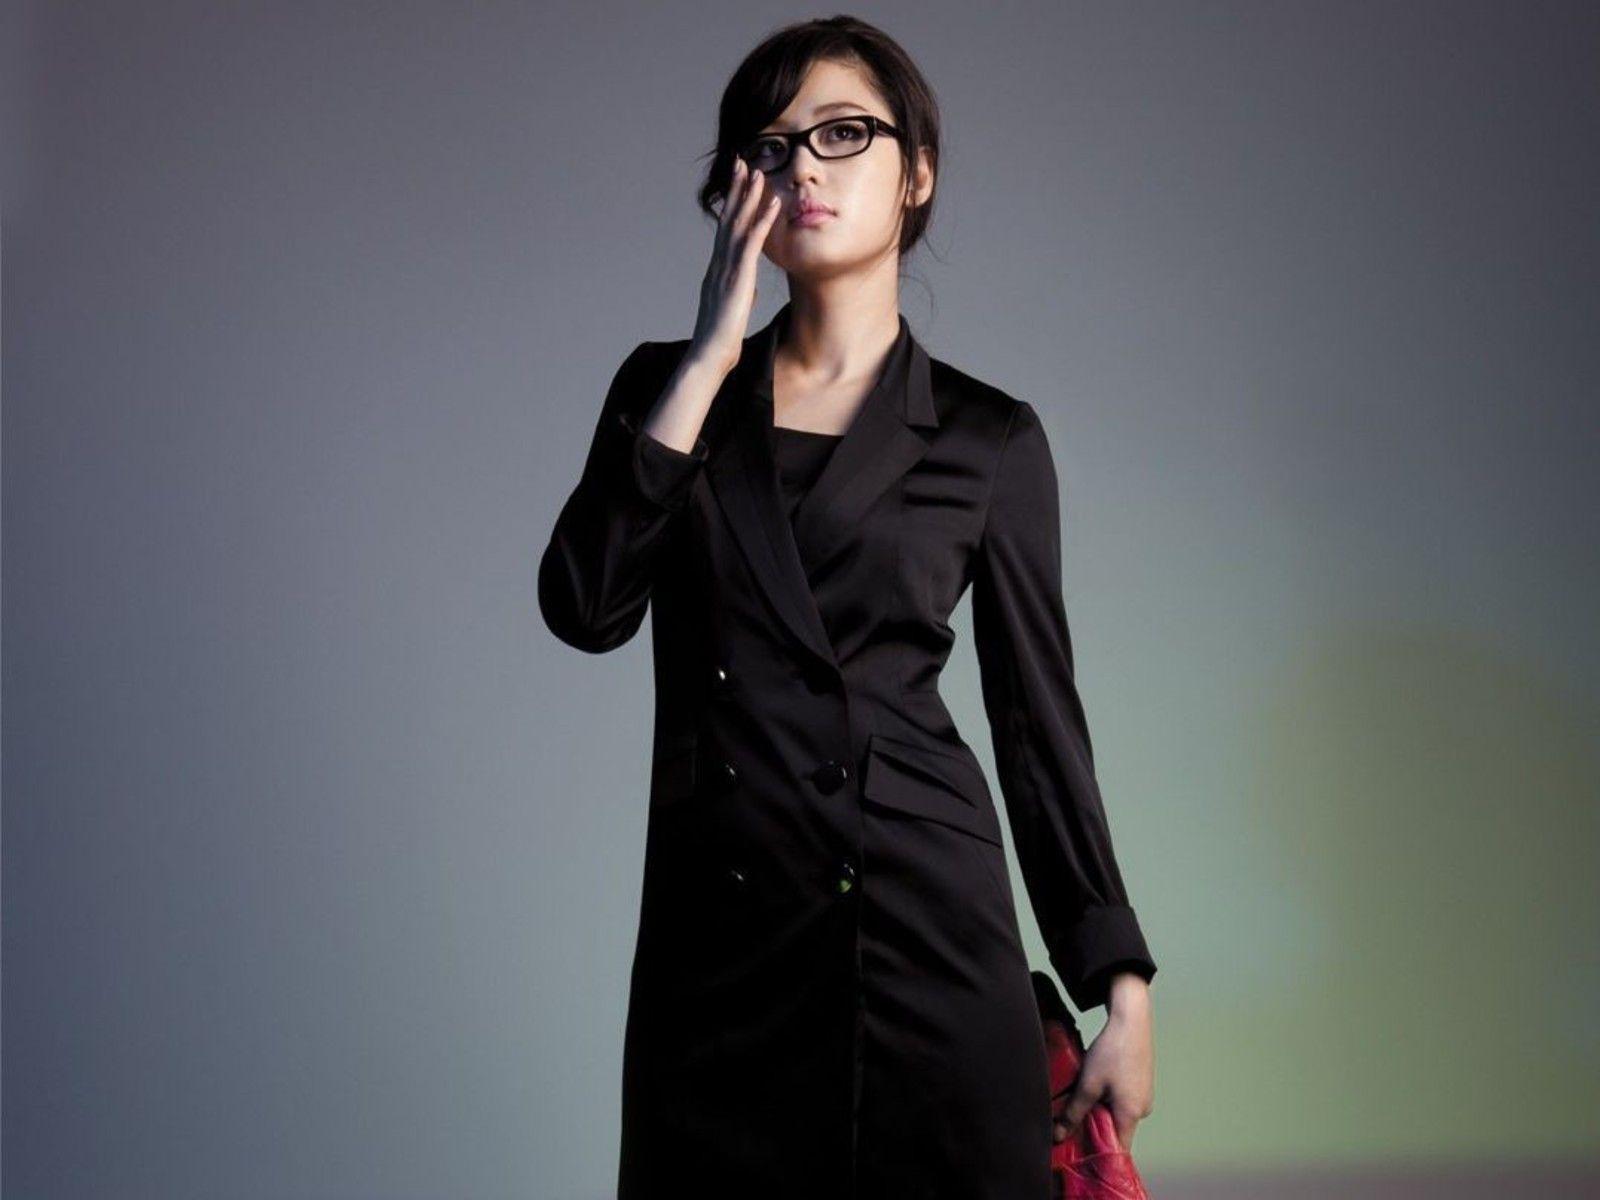 Asians jeon ji hyun korean girls with glasses wallpaper